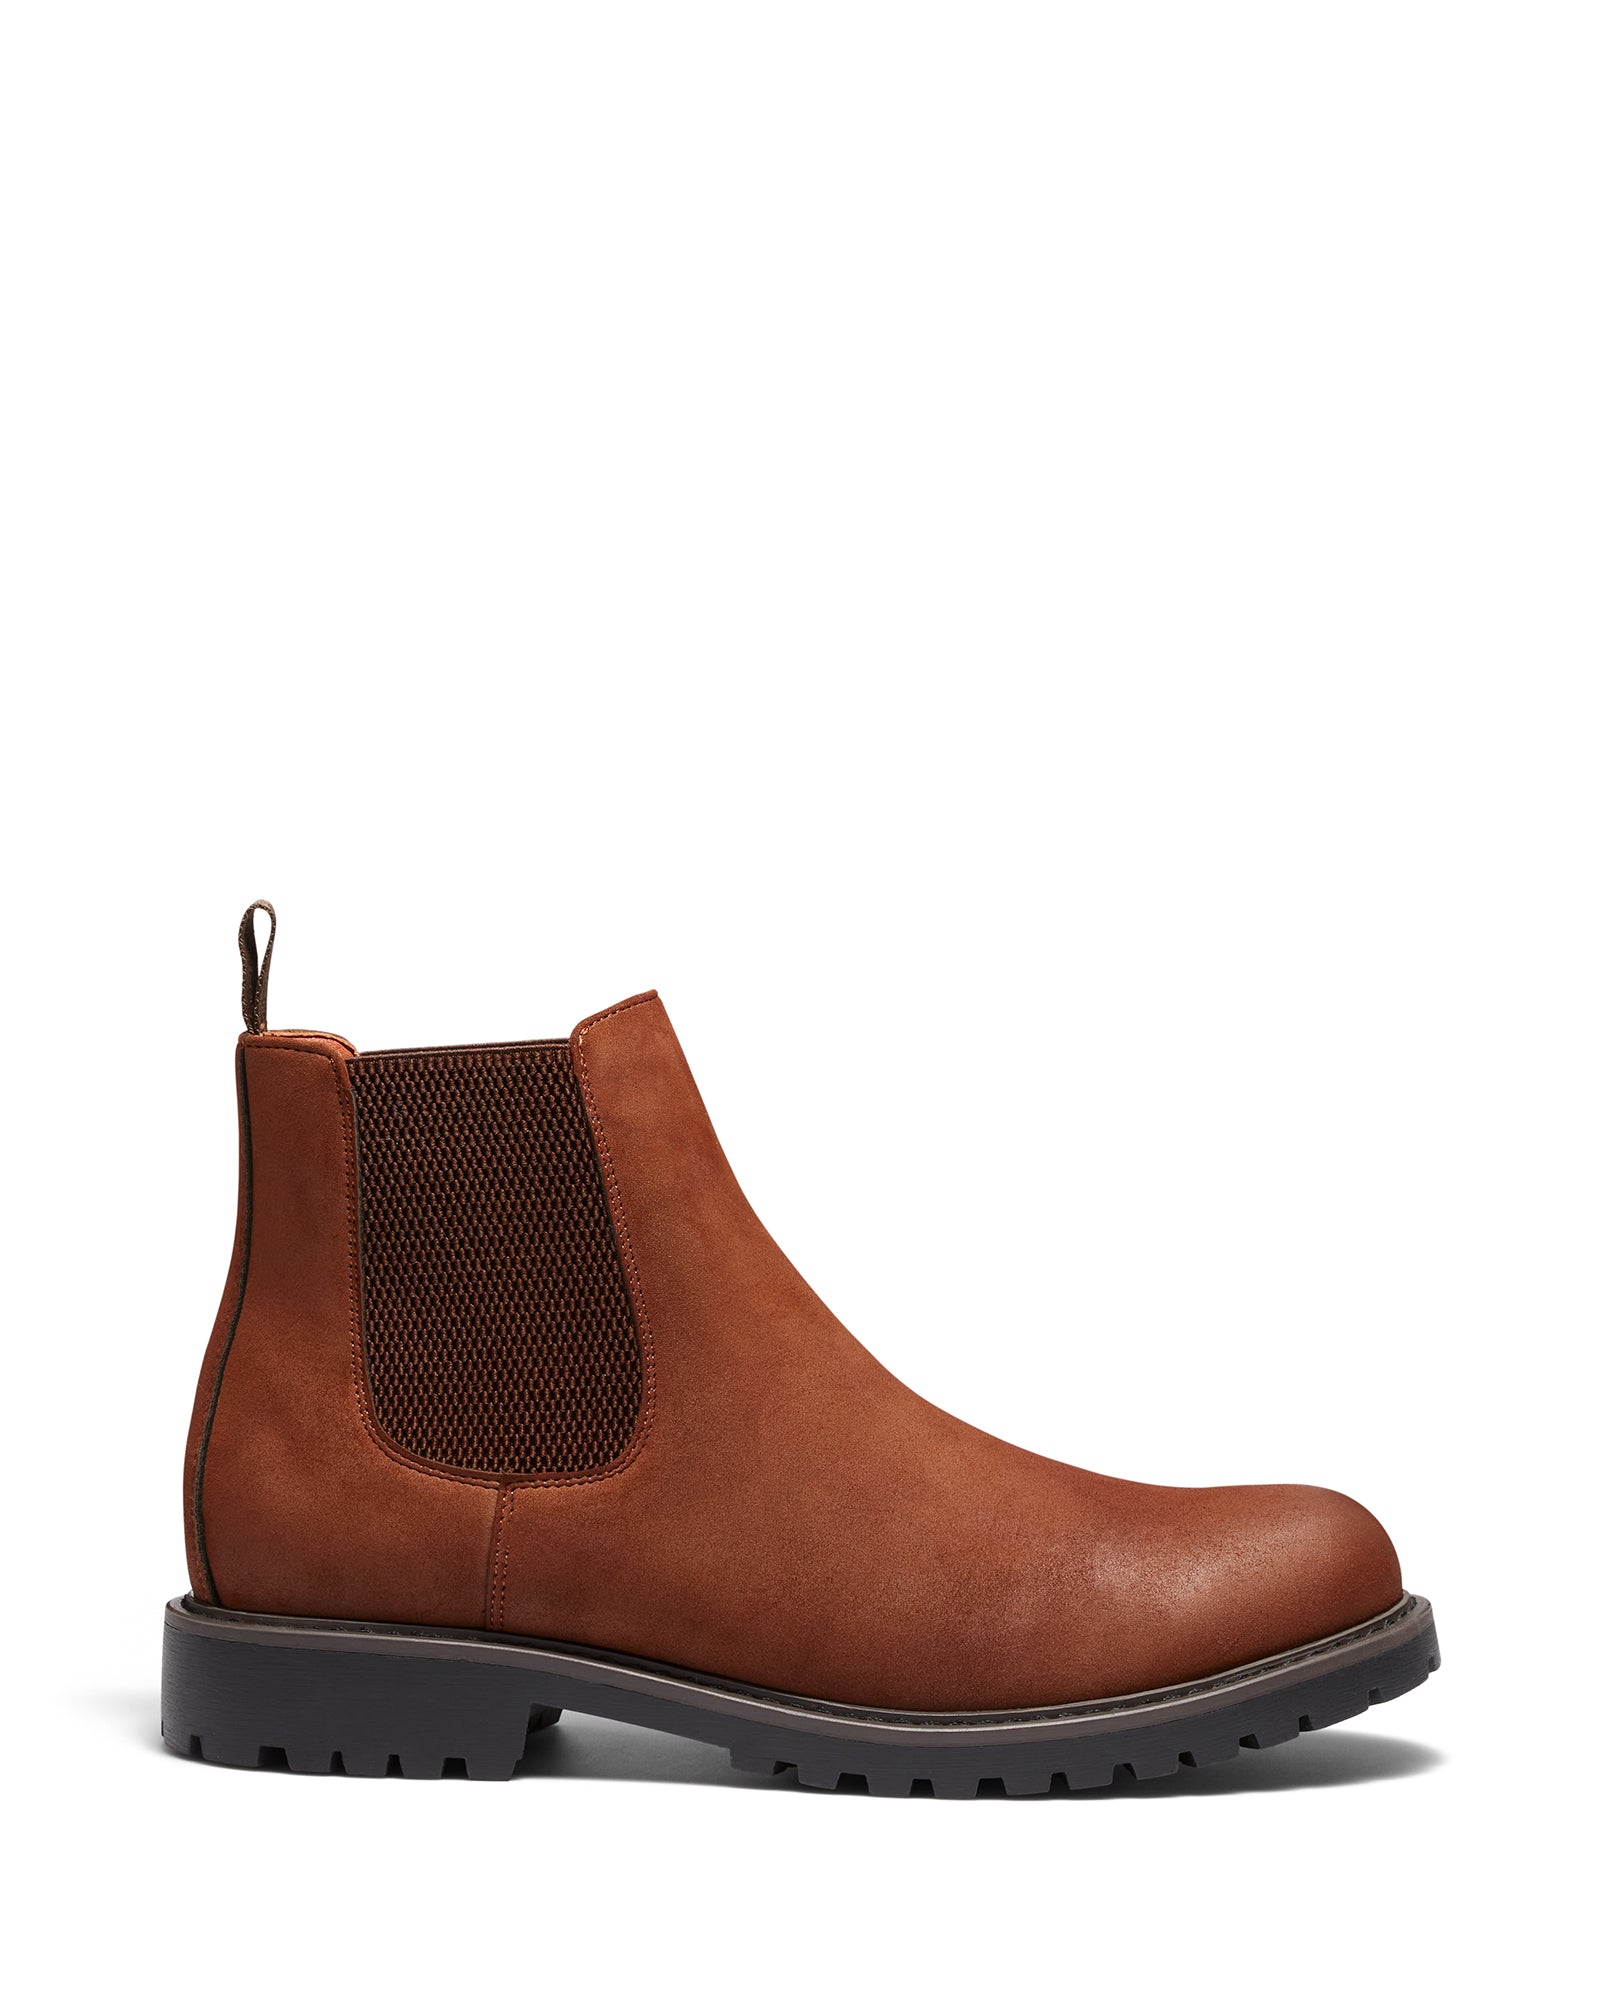 Uncut Shoes Mason Cognac | Men's Boot | Casual | Pull On 